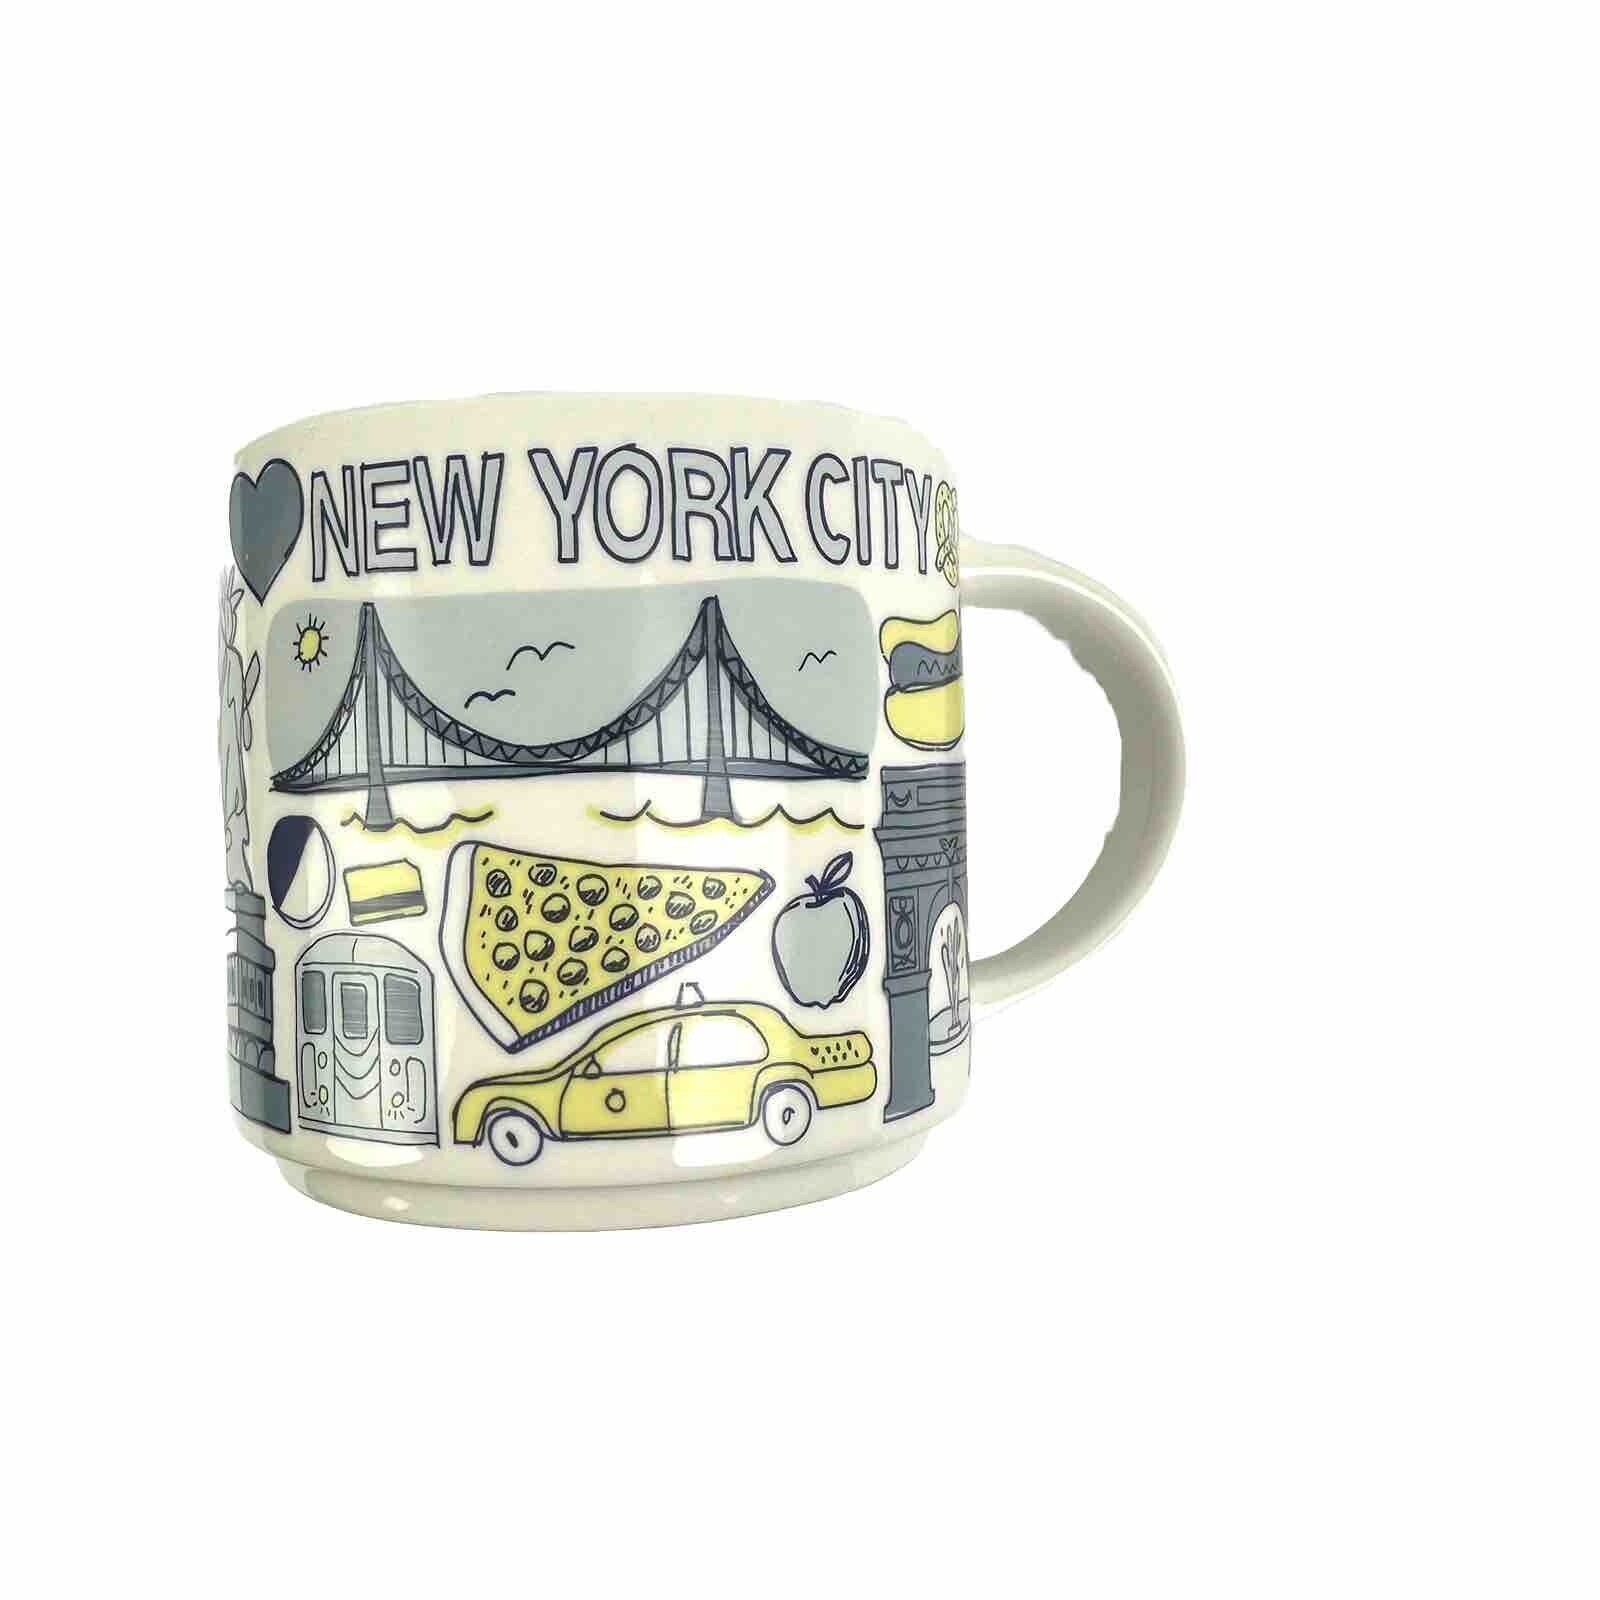 Starbucks New York City Manhattan Been There Series Collection Mug 2018 New